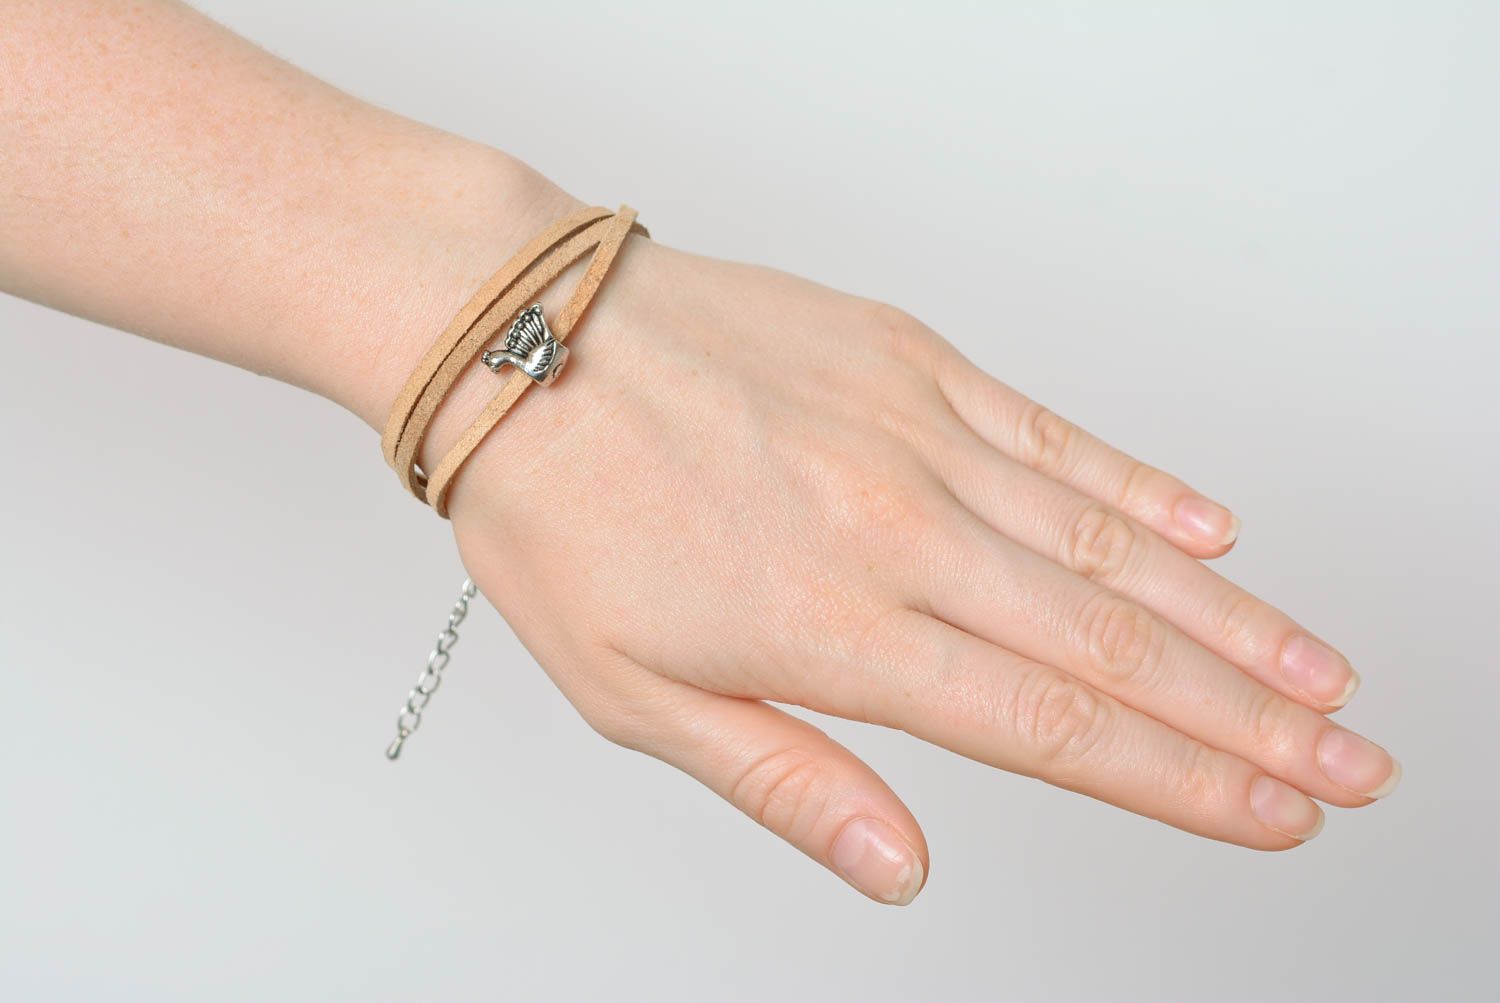 Handmade bracelet fashion jewelry string bracelet handcrafted jewelry gift ideas photo 4